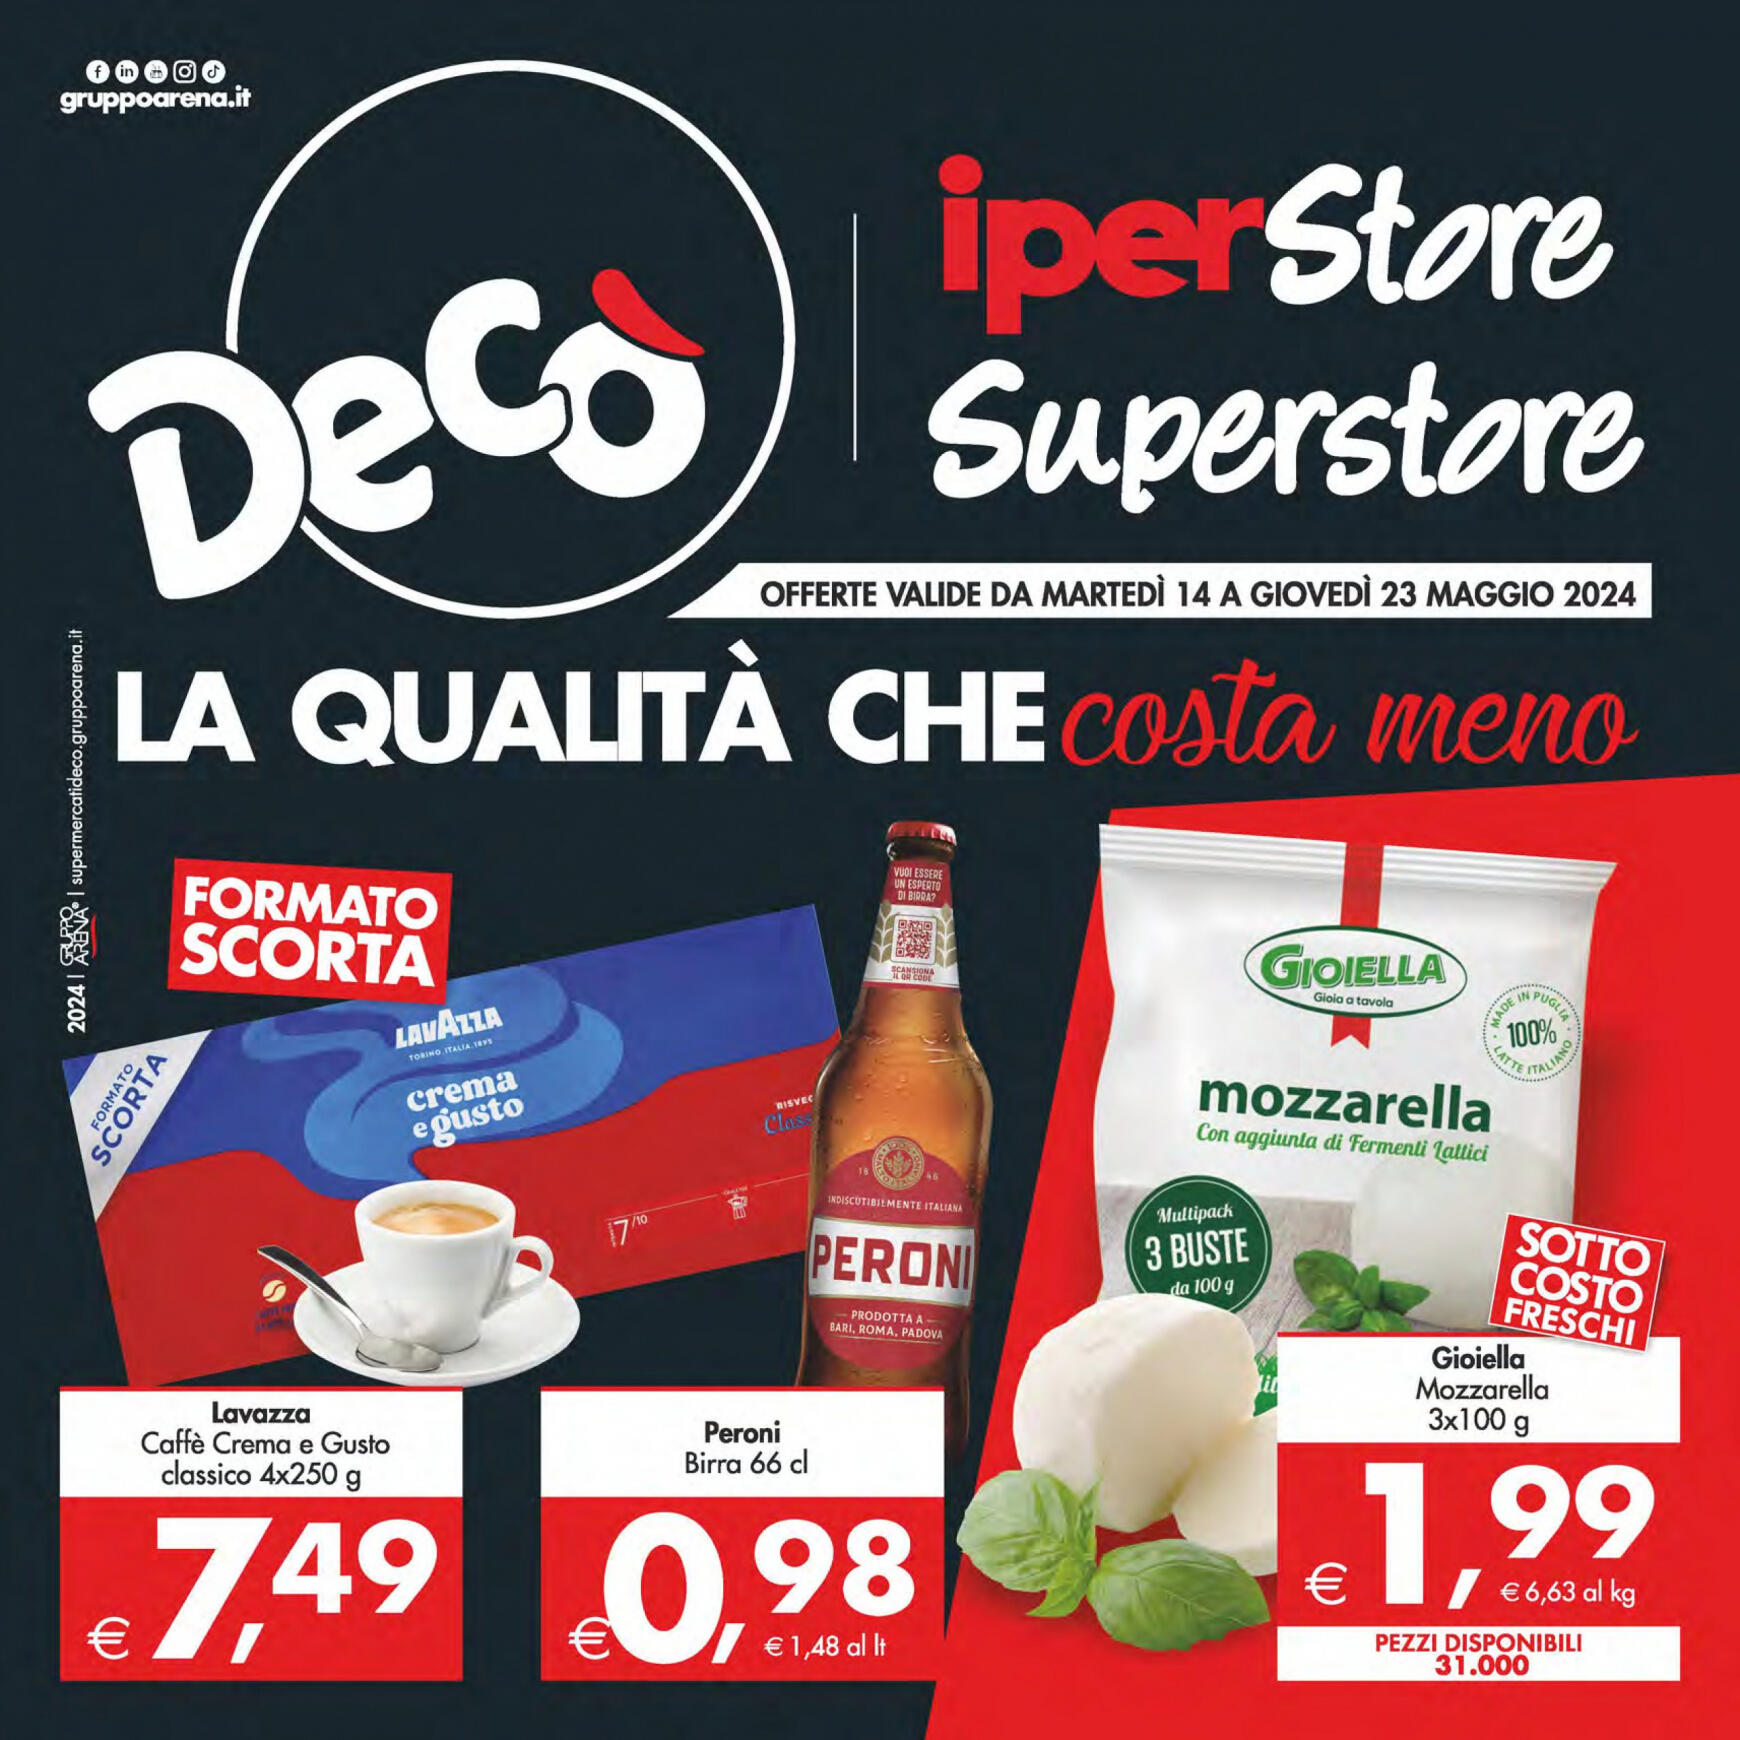 deco - Nuovo volantino Decò - Iperstore/Superstore Deco' 14.05. - 23.05.